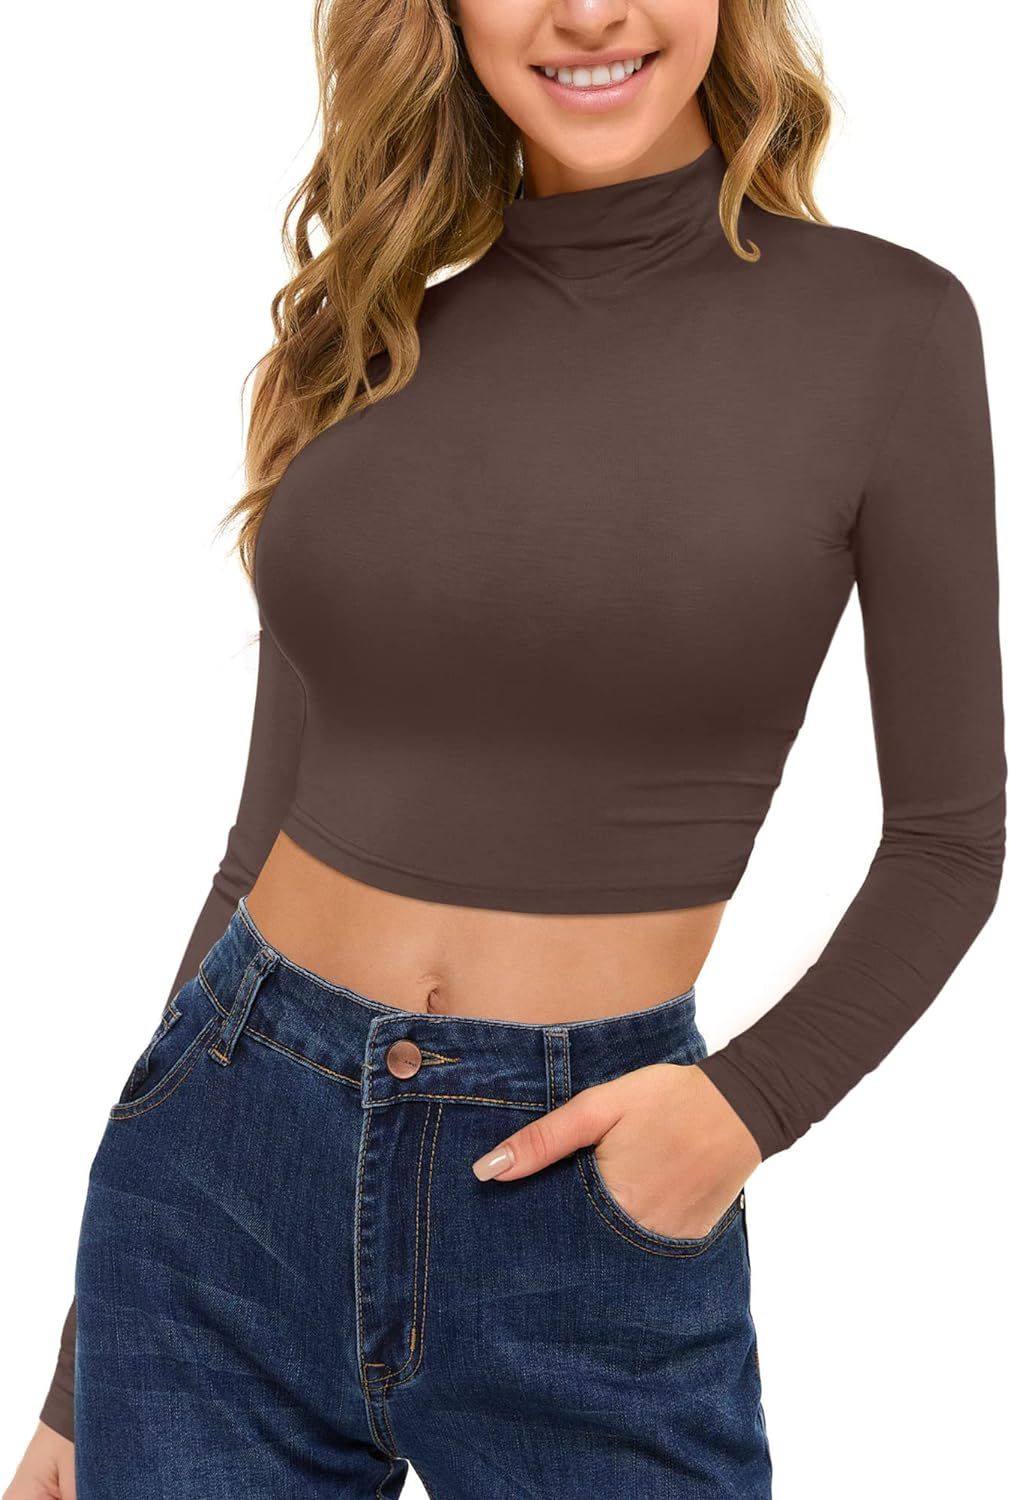 MSBASIC Womens Long Sleeve Turtleneck Crop Top Basic Slim Fit Crop T-Shirt | Amazon (US)